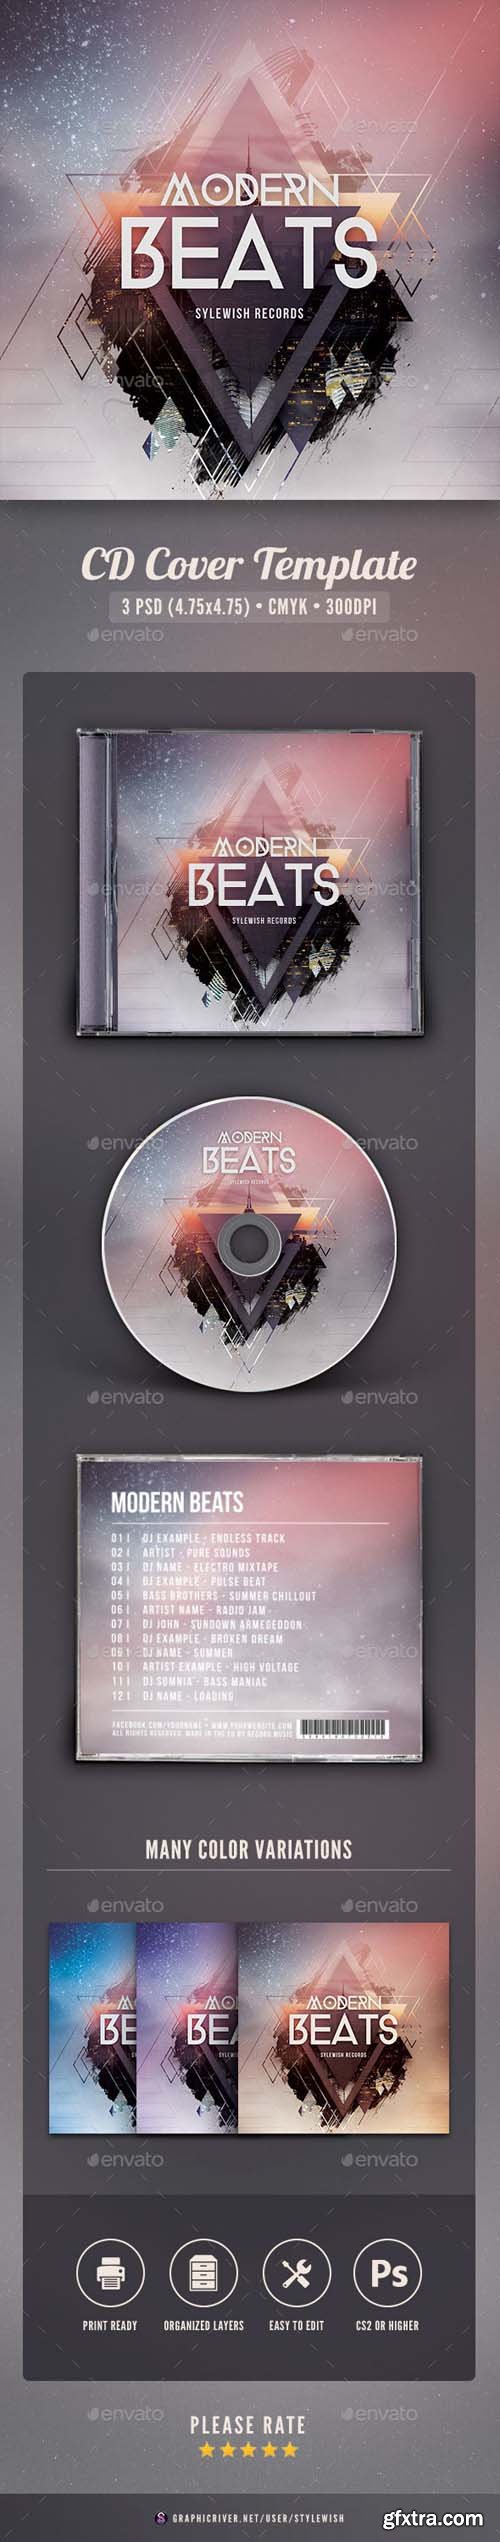 GR - Modern Beats CD Cover Artwork 16142099